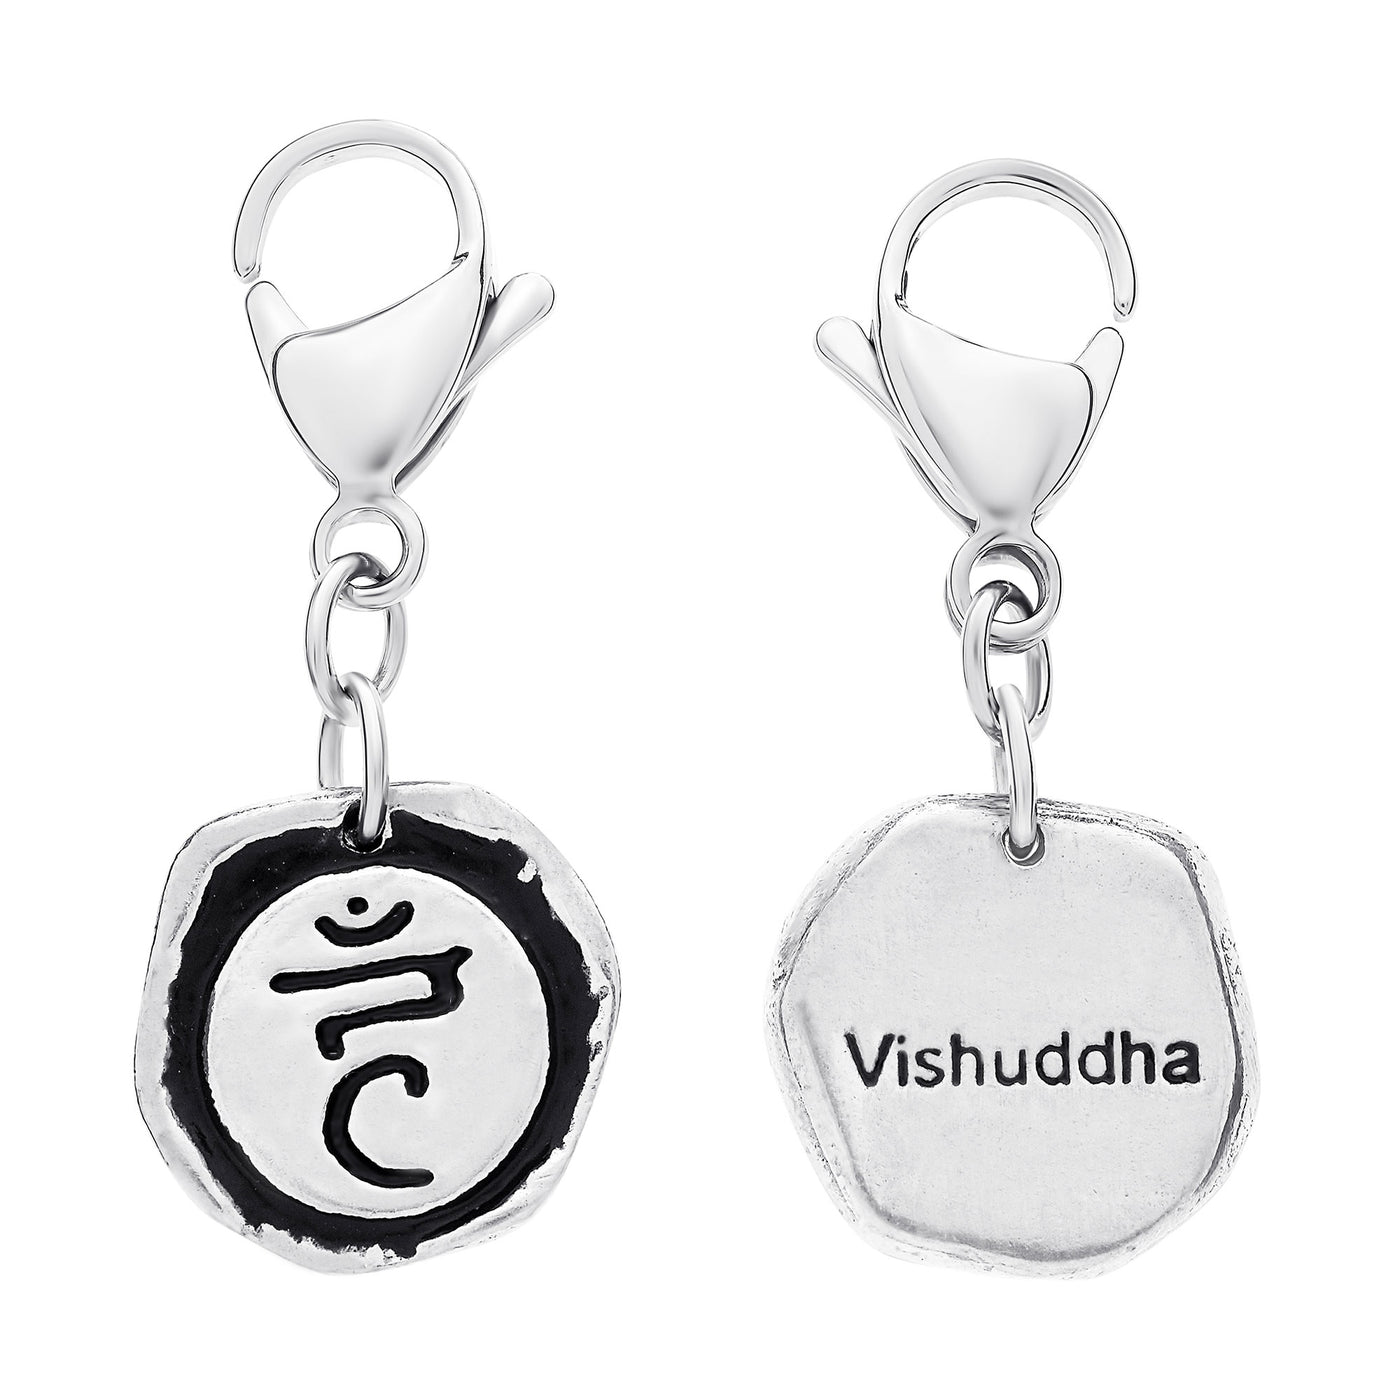 THROAT CHAKRA: Detachable Vishudda charm